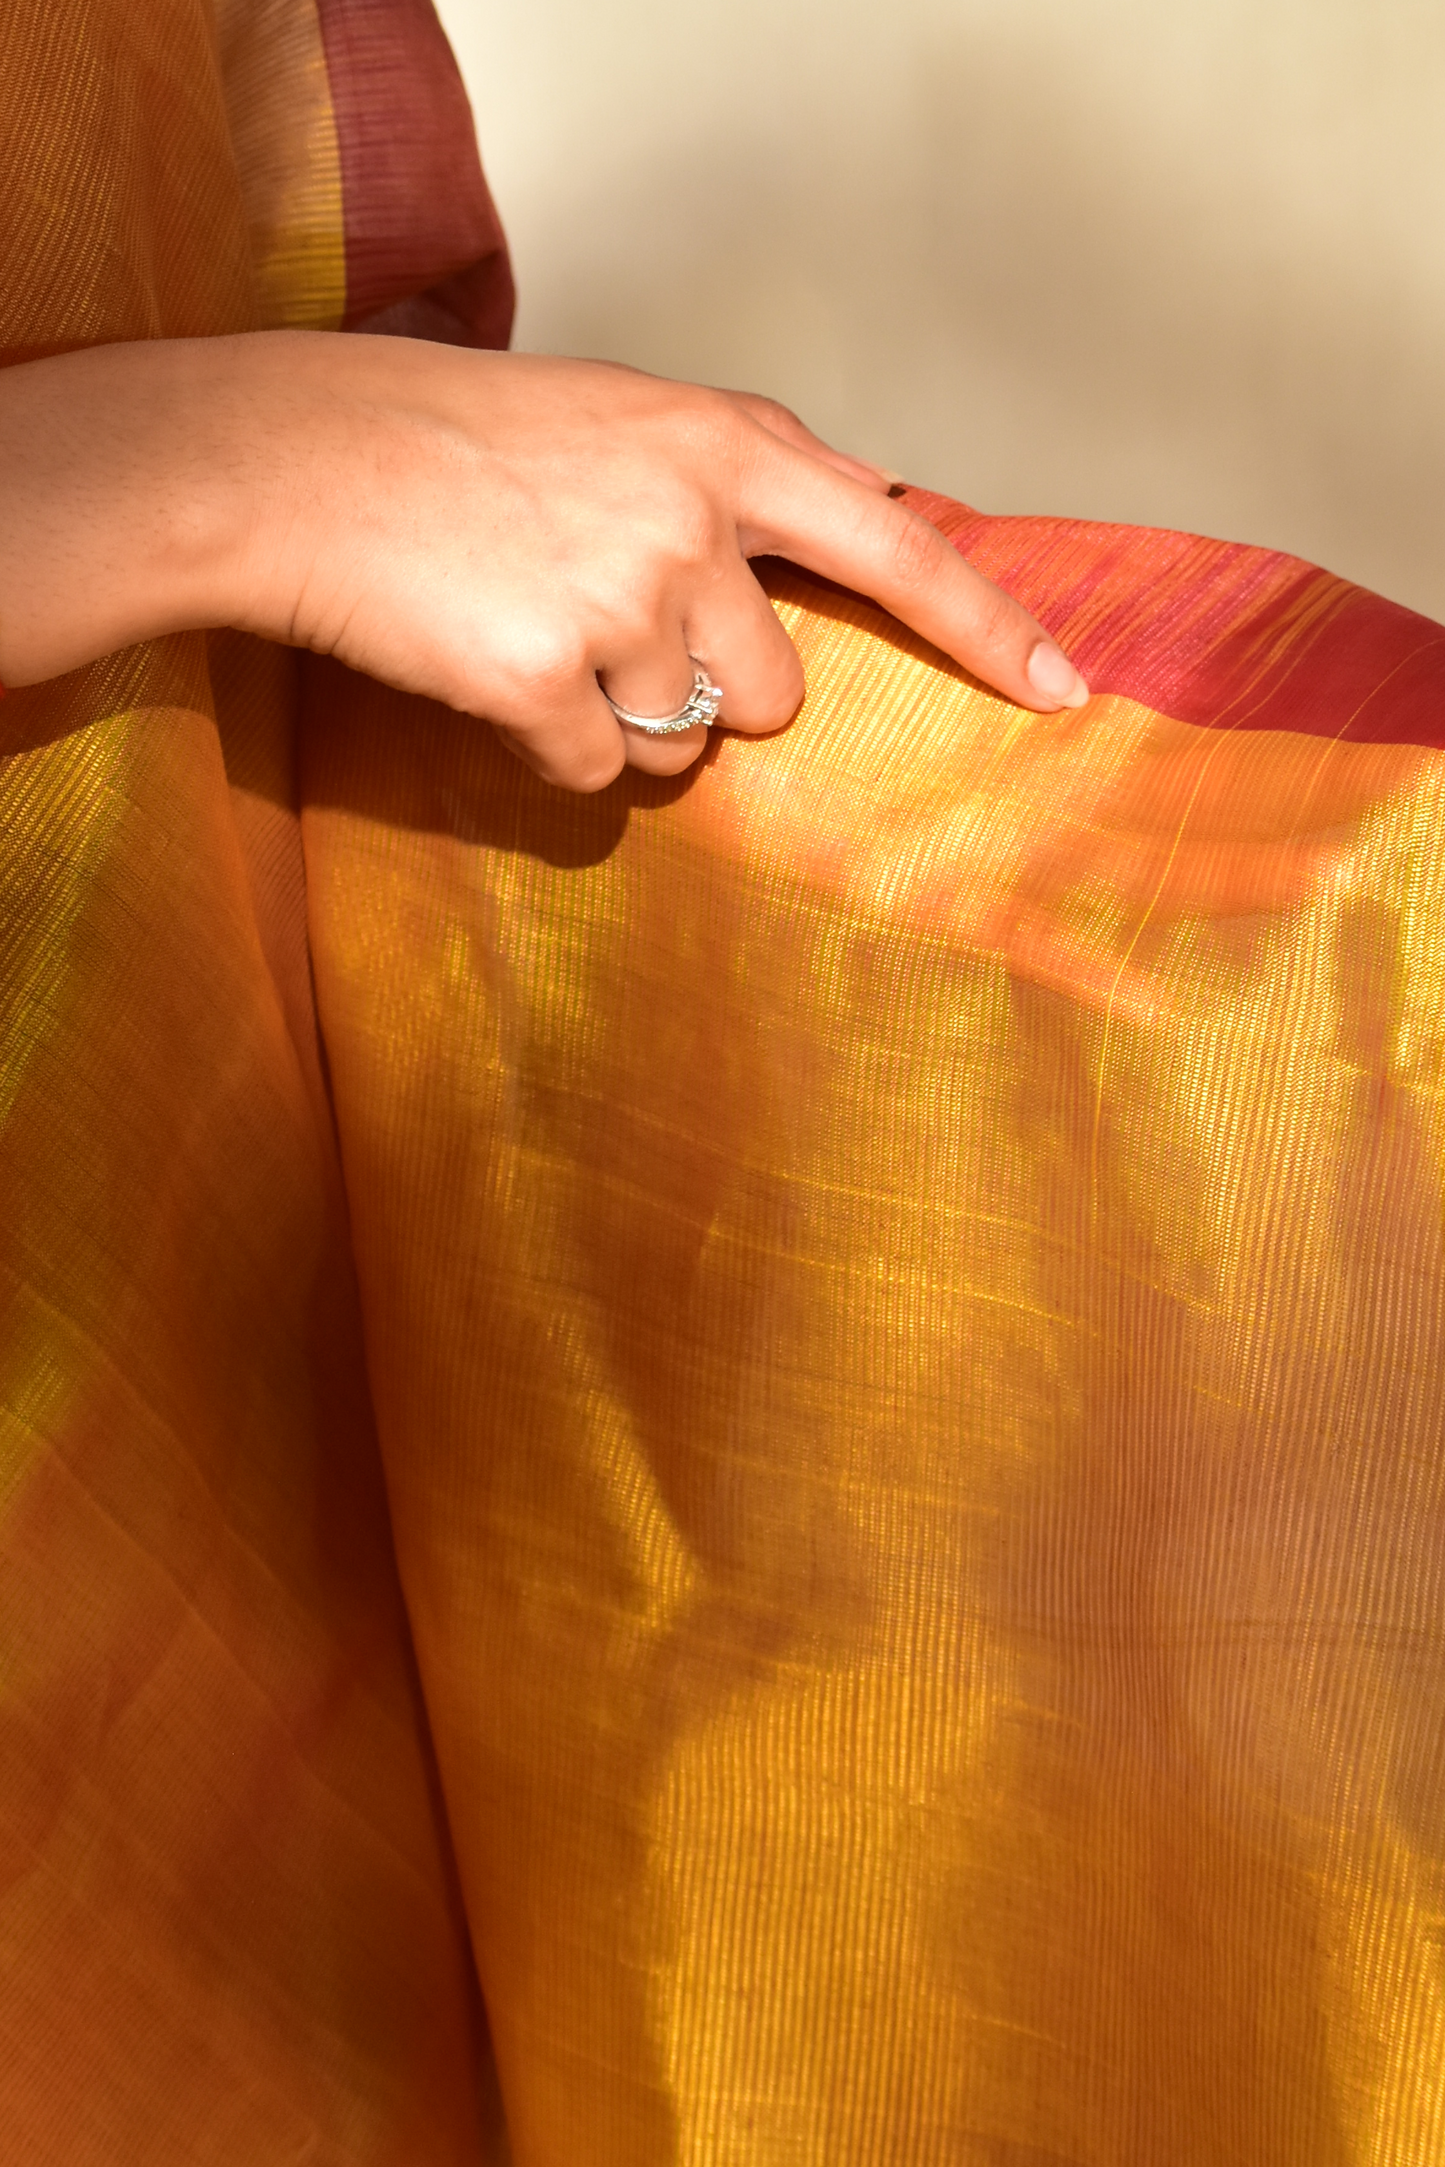 Marigold Yellow with Ikkat Pallu Cotton Saree in Mangalgiri Handwoven Silk, SS1026